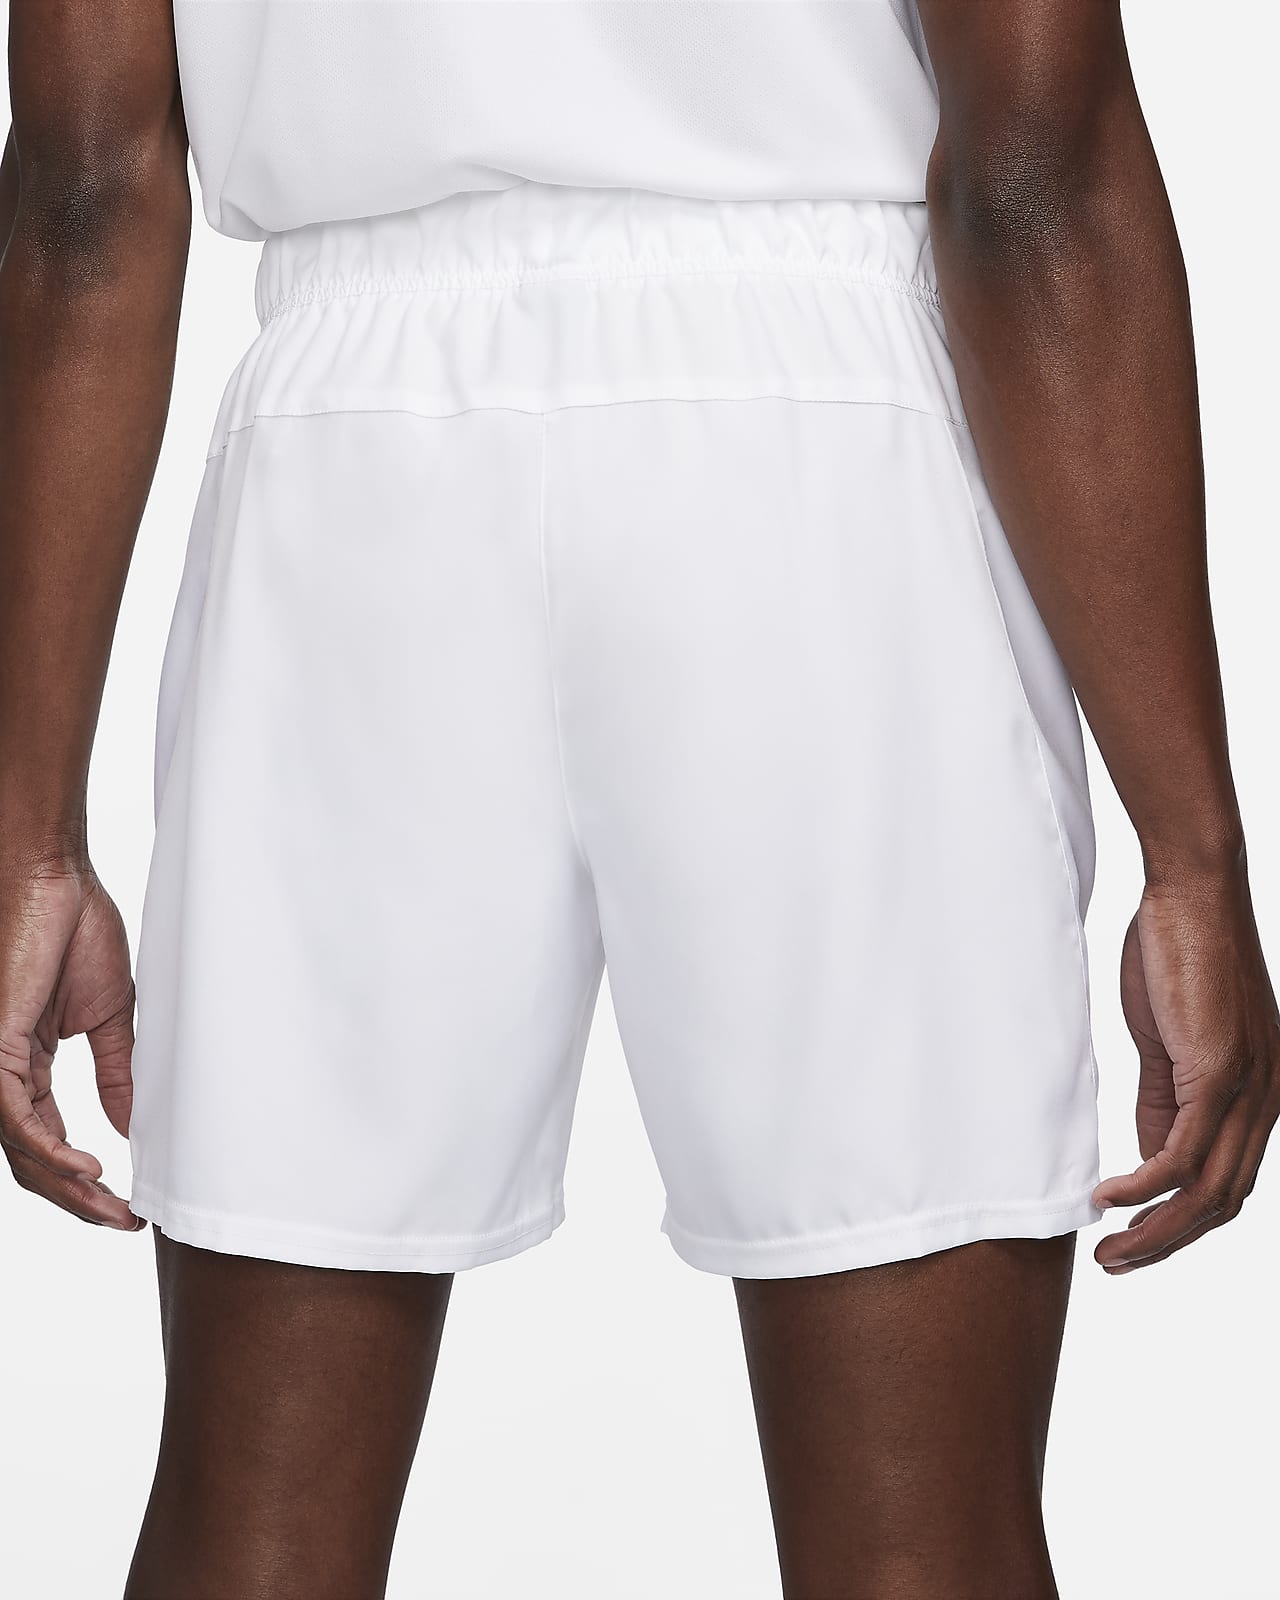 Shorts Nikecourt Dri-fit Victory Masculino Tennis